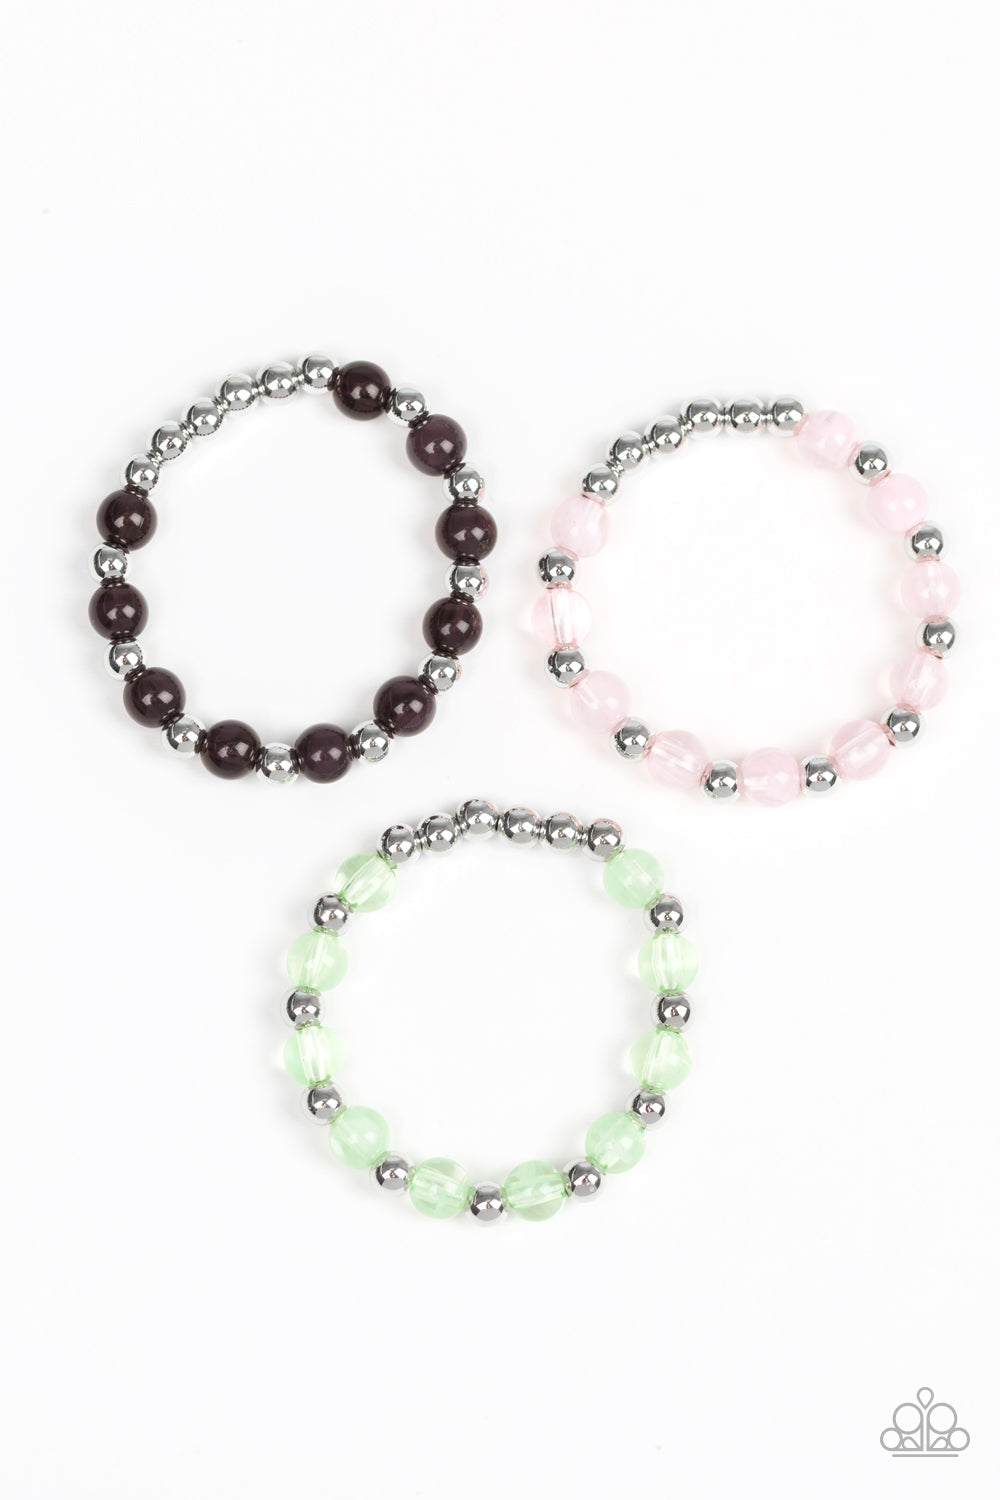 Paparazzi Starlet Shimmer Bracelets - 10 - Black, Green, Pink & Purple / Silver Beads - $5 Jewelry With Ashley Swint